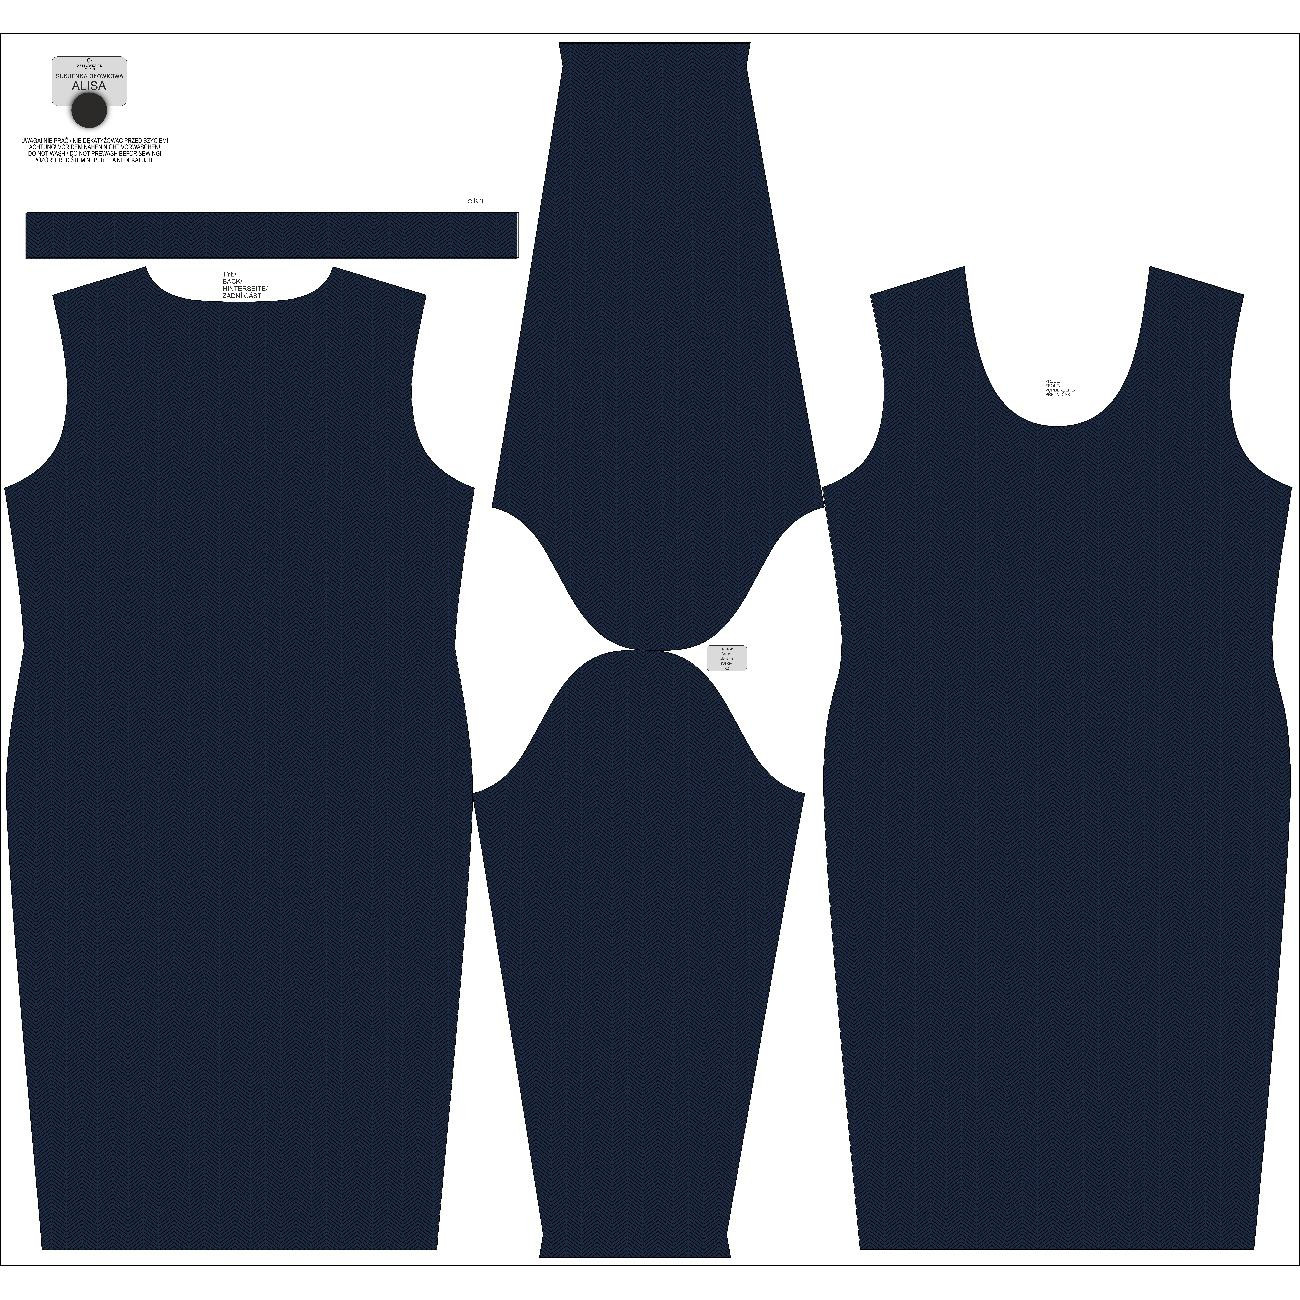 PENCIL DRESS (ALISA) - HERRINGBONE / NIGHT CALL / navy - sewing set